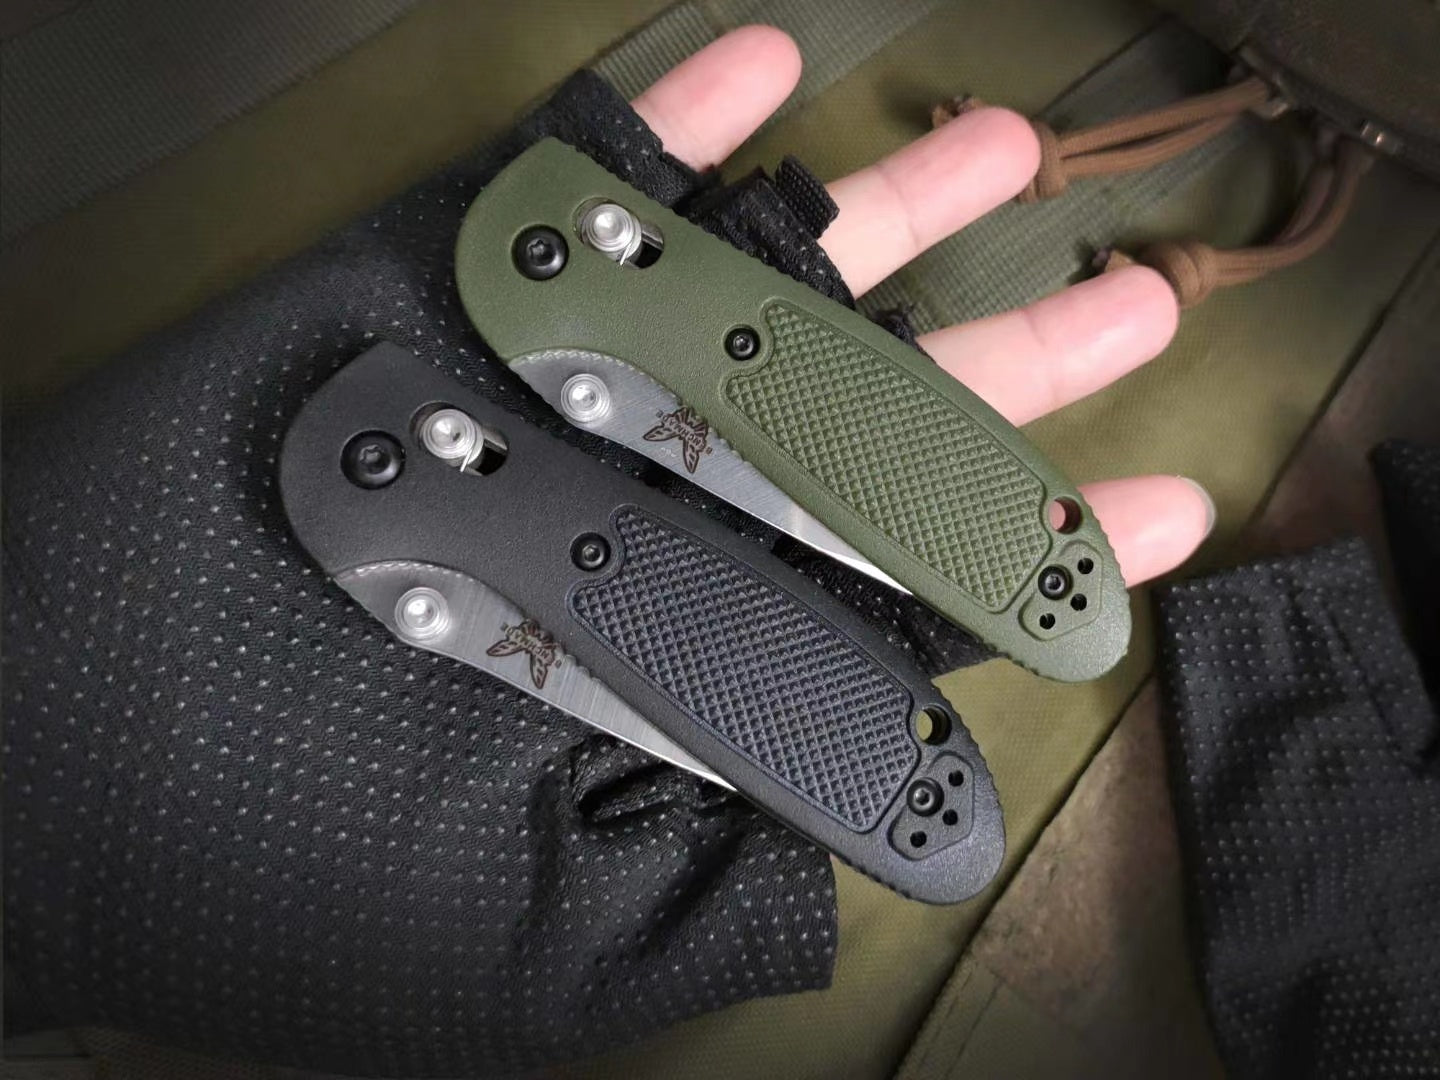 Benchmade Mini Griptilian AXIS Lock Folding Knife 2.91" S30V Satin Drop Point Plain Blade, Black Noryl GTX Handles - 556-S30V Tactical hunting camping pocket knife